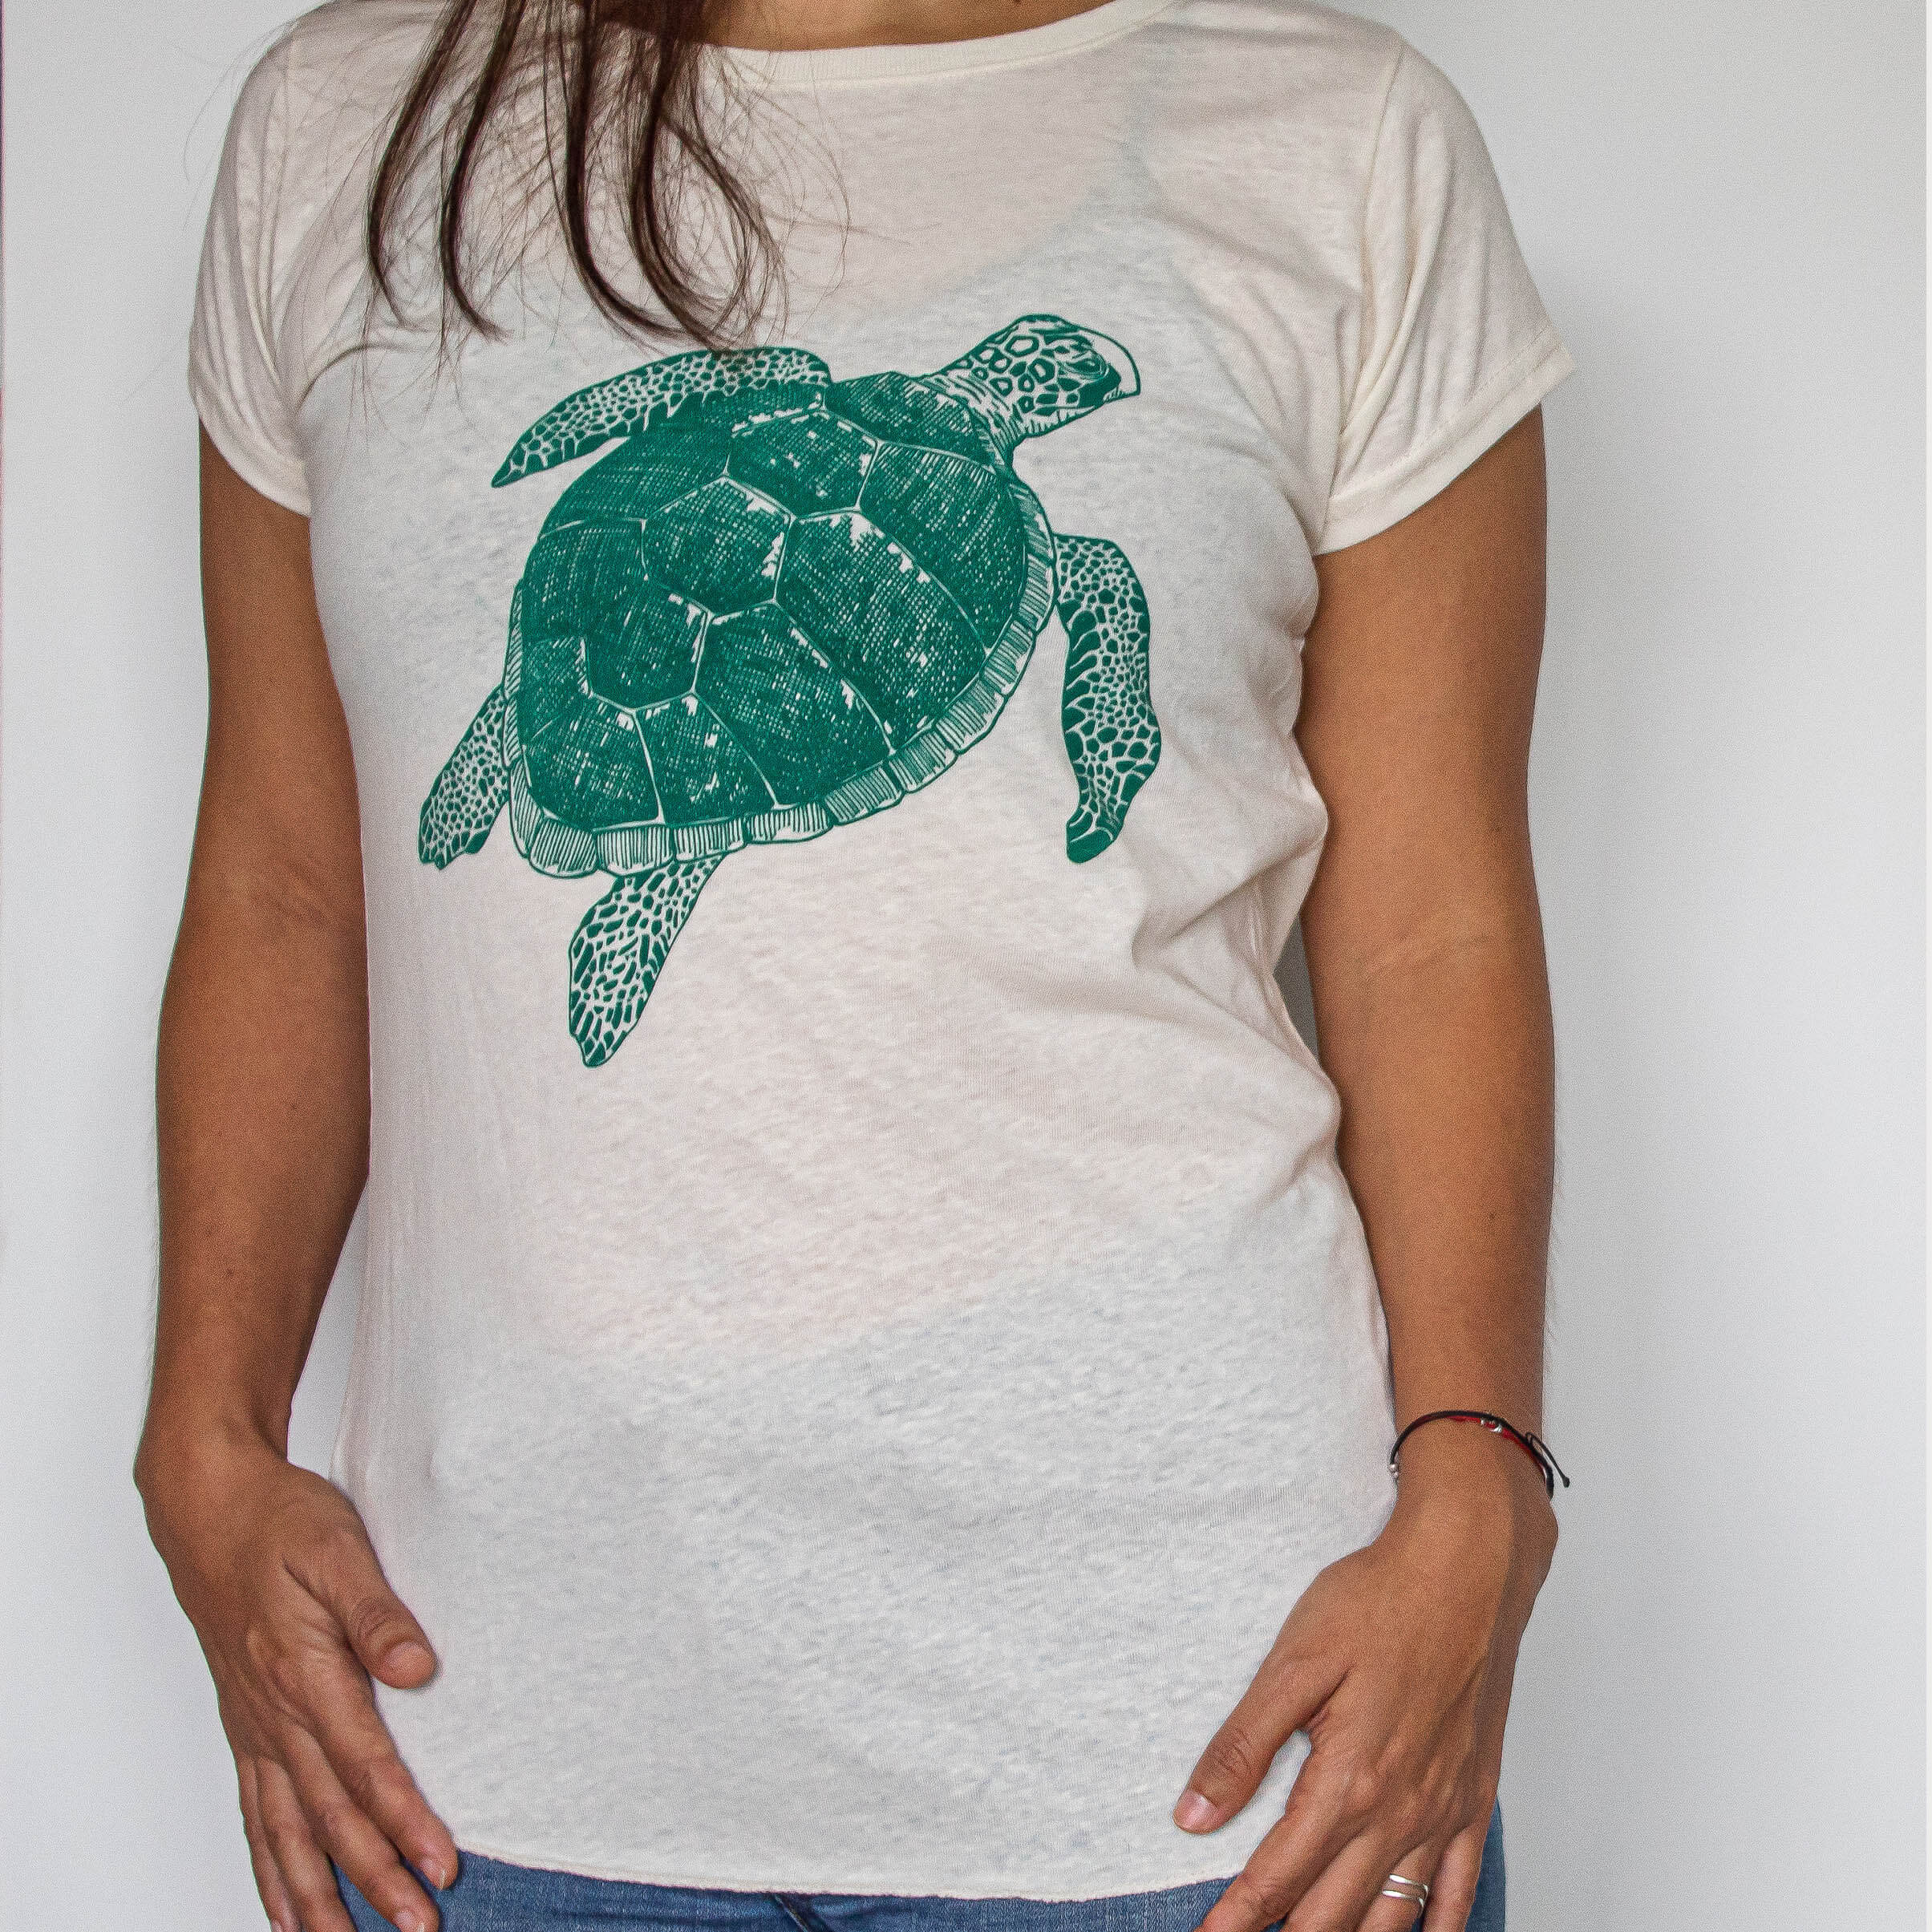 Mobula Shirt - Salinas Bay  Science Research and Online Shop